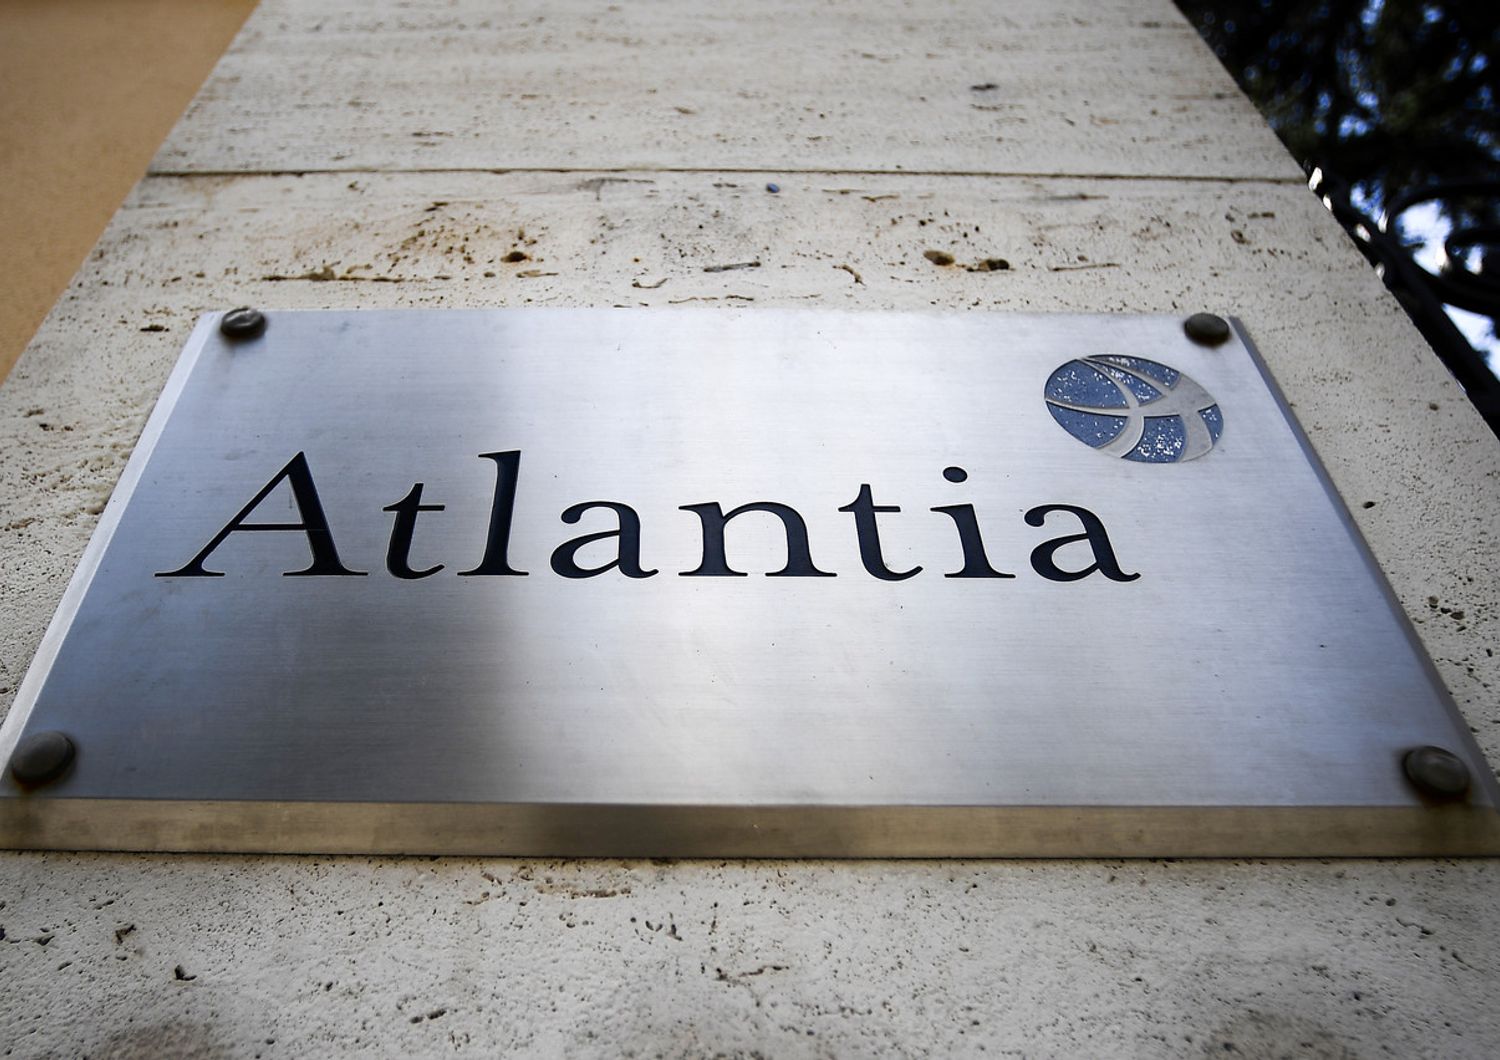 Atlantia (AFP)